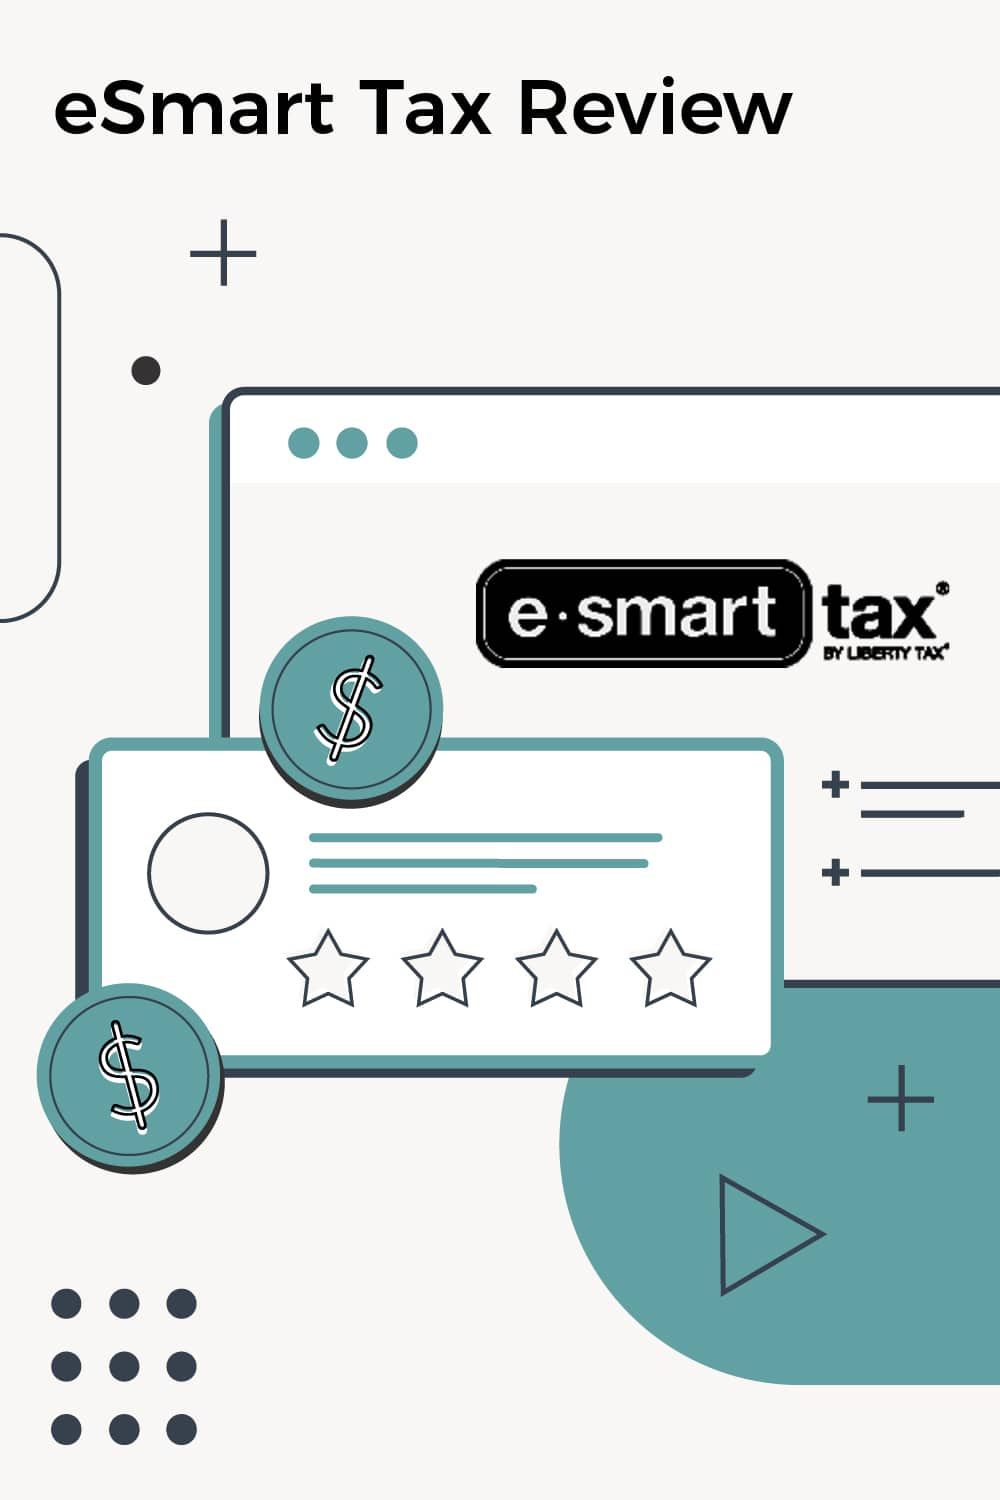 eSmart Tax Review pinterest image